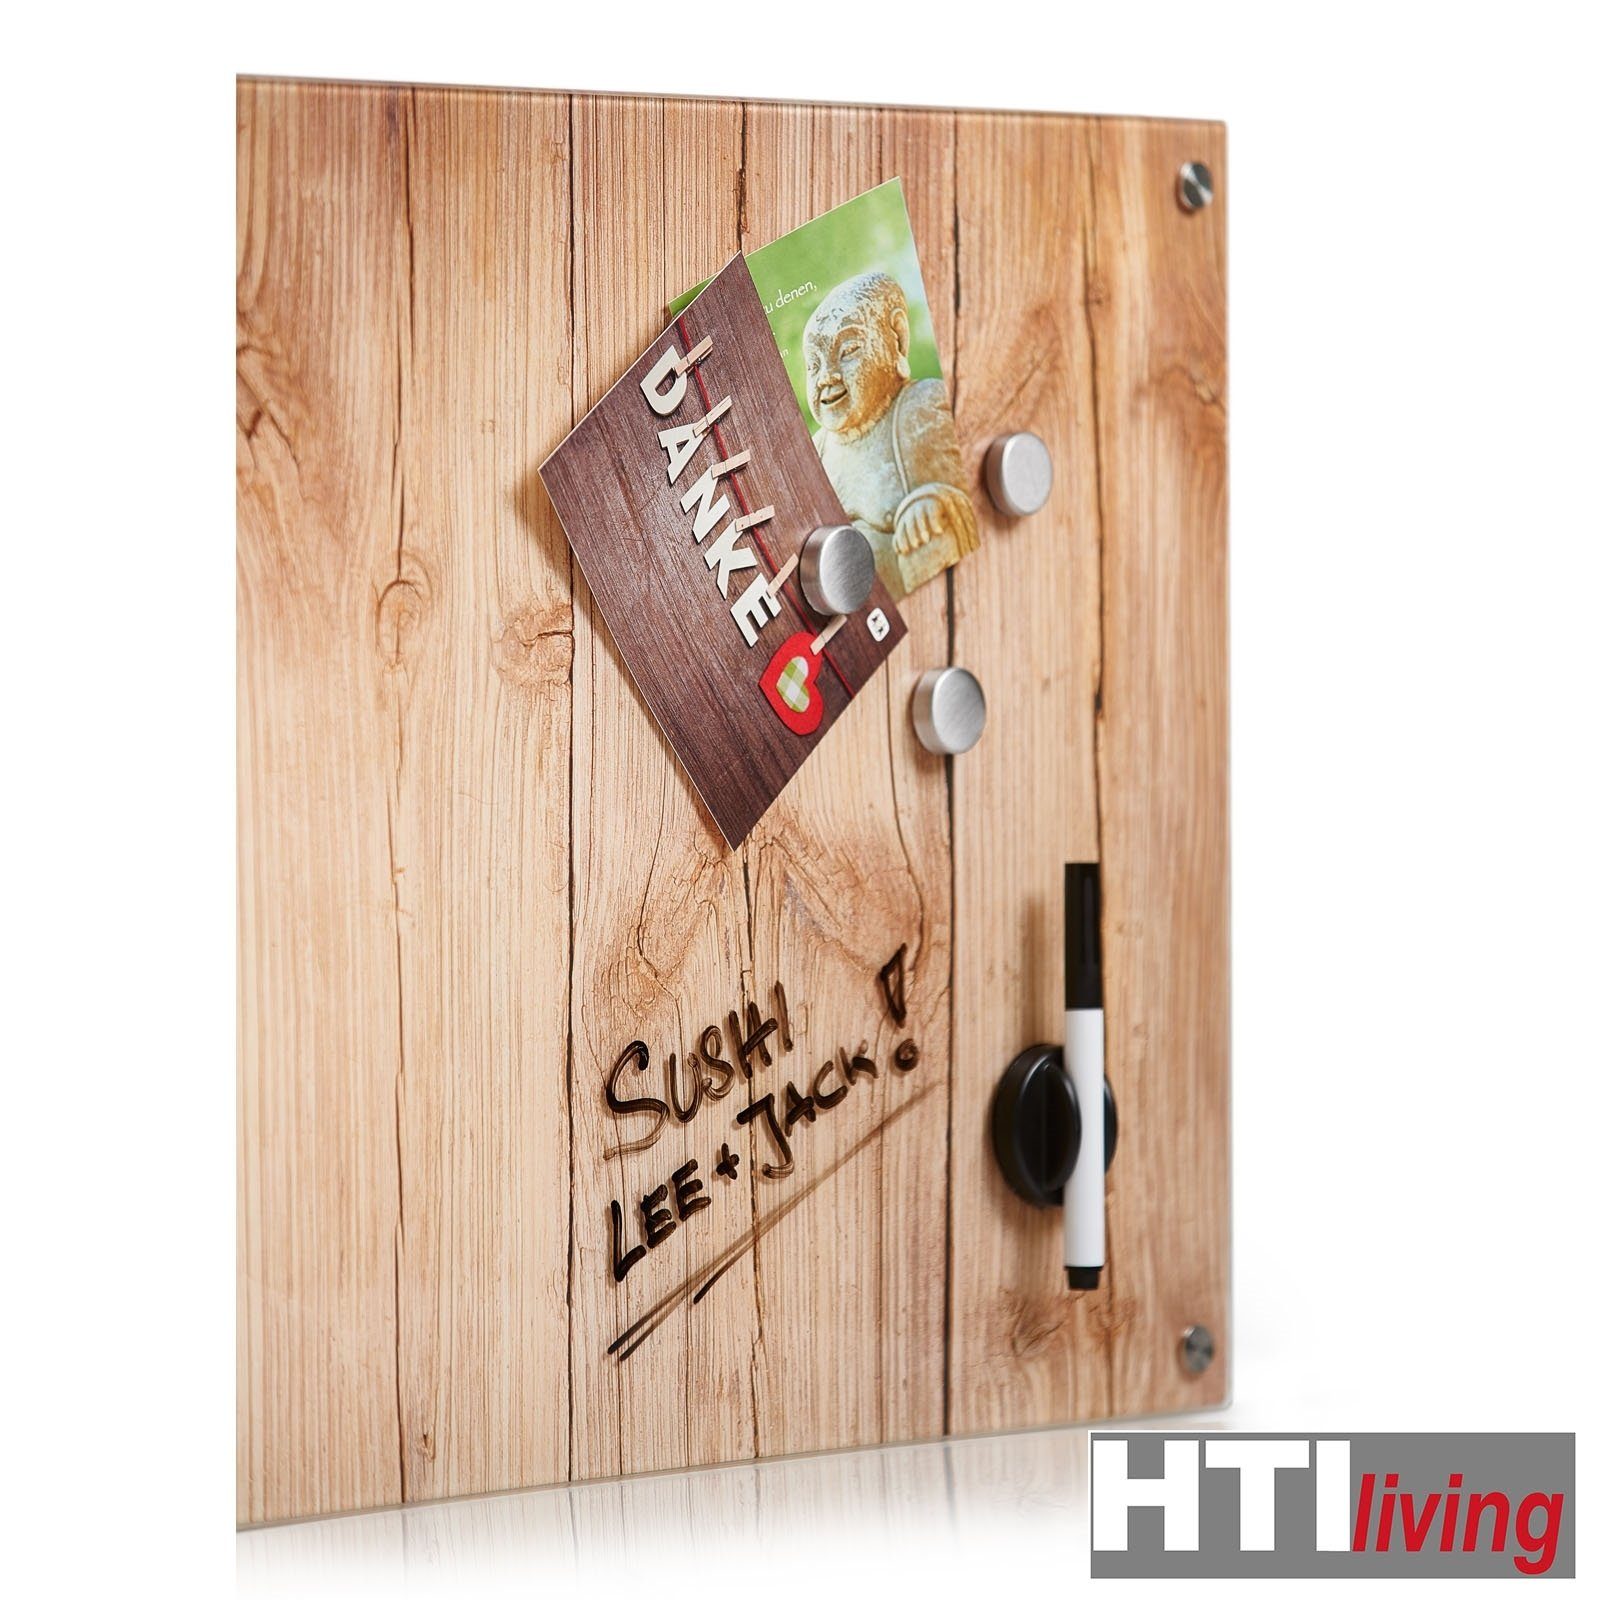 HTI-Living Memoboard Memoboard Pinnwand Wood, Glas Magnetboard Magnettafel Schreibboard Schreibtafel